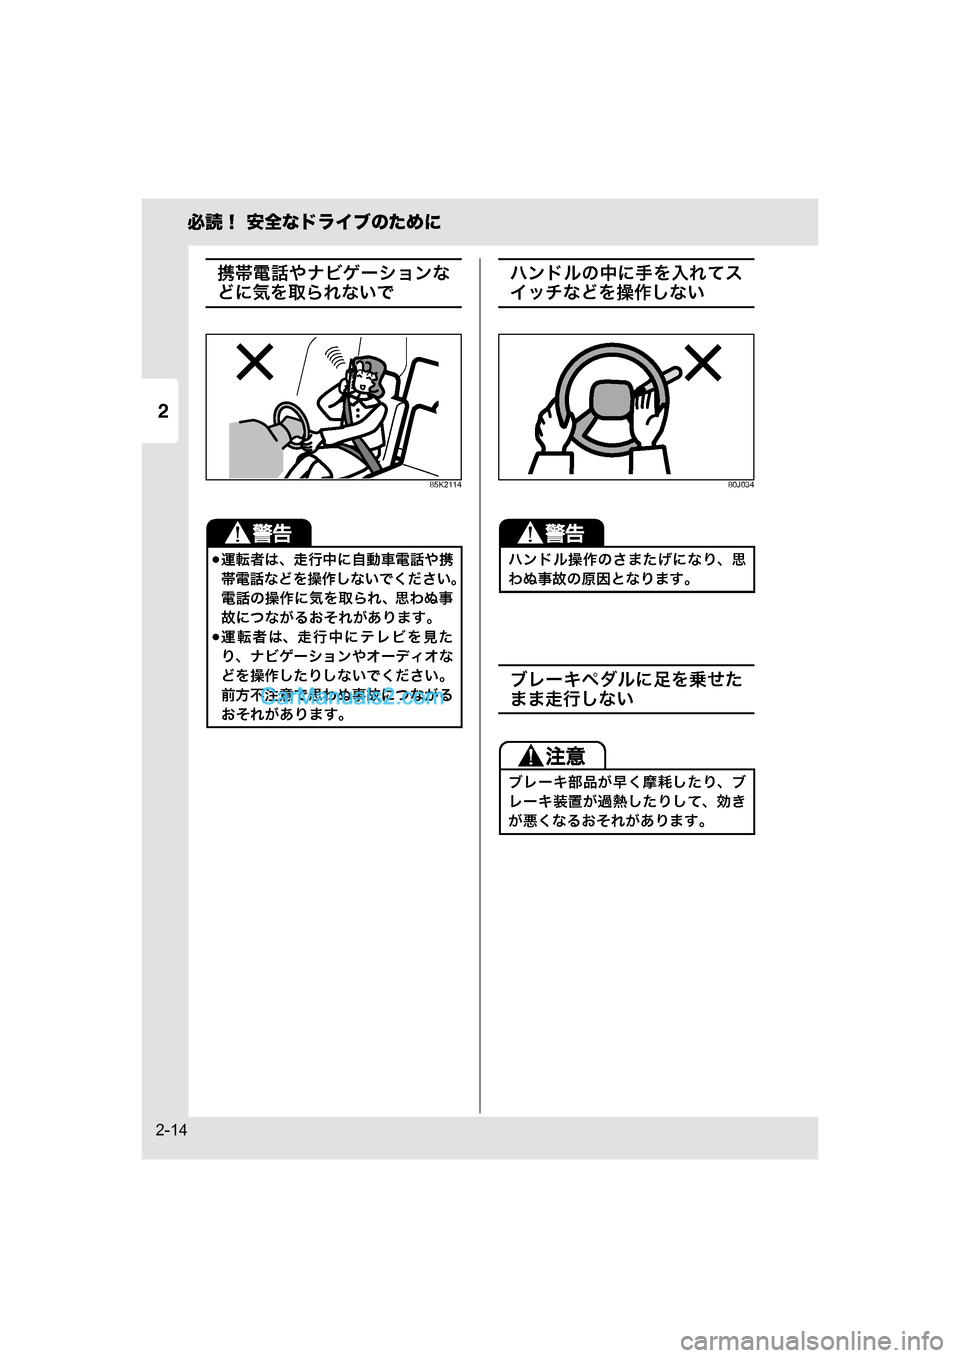 MAZDA MODEL CARROL 2015  取扱説明書 (キャロル) (in Japanese) 2
必読！ 安全なドライブのために
2-14
携帯電話やナビゲーションな
どに気を取られないで
85K2114
ハンドルの中に手を入れてス
イッチなどを操作しな